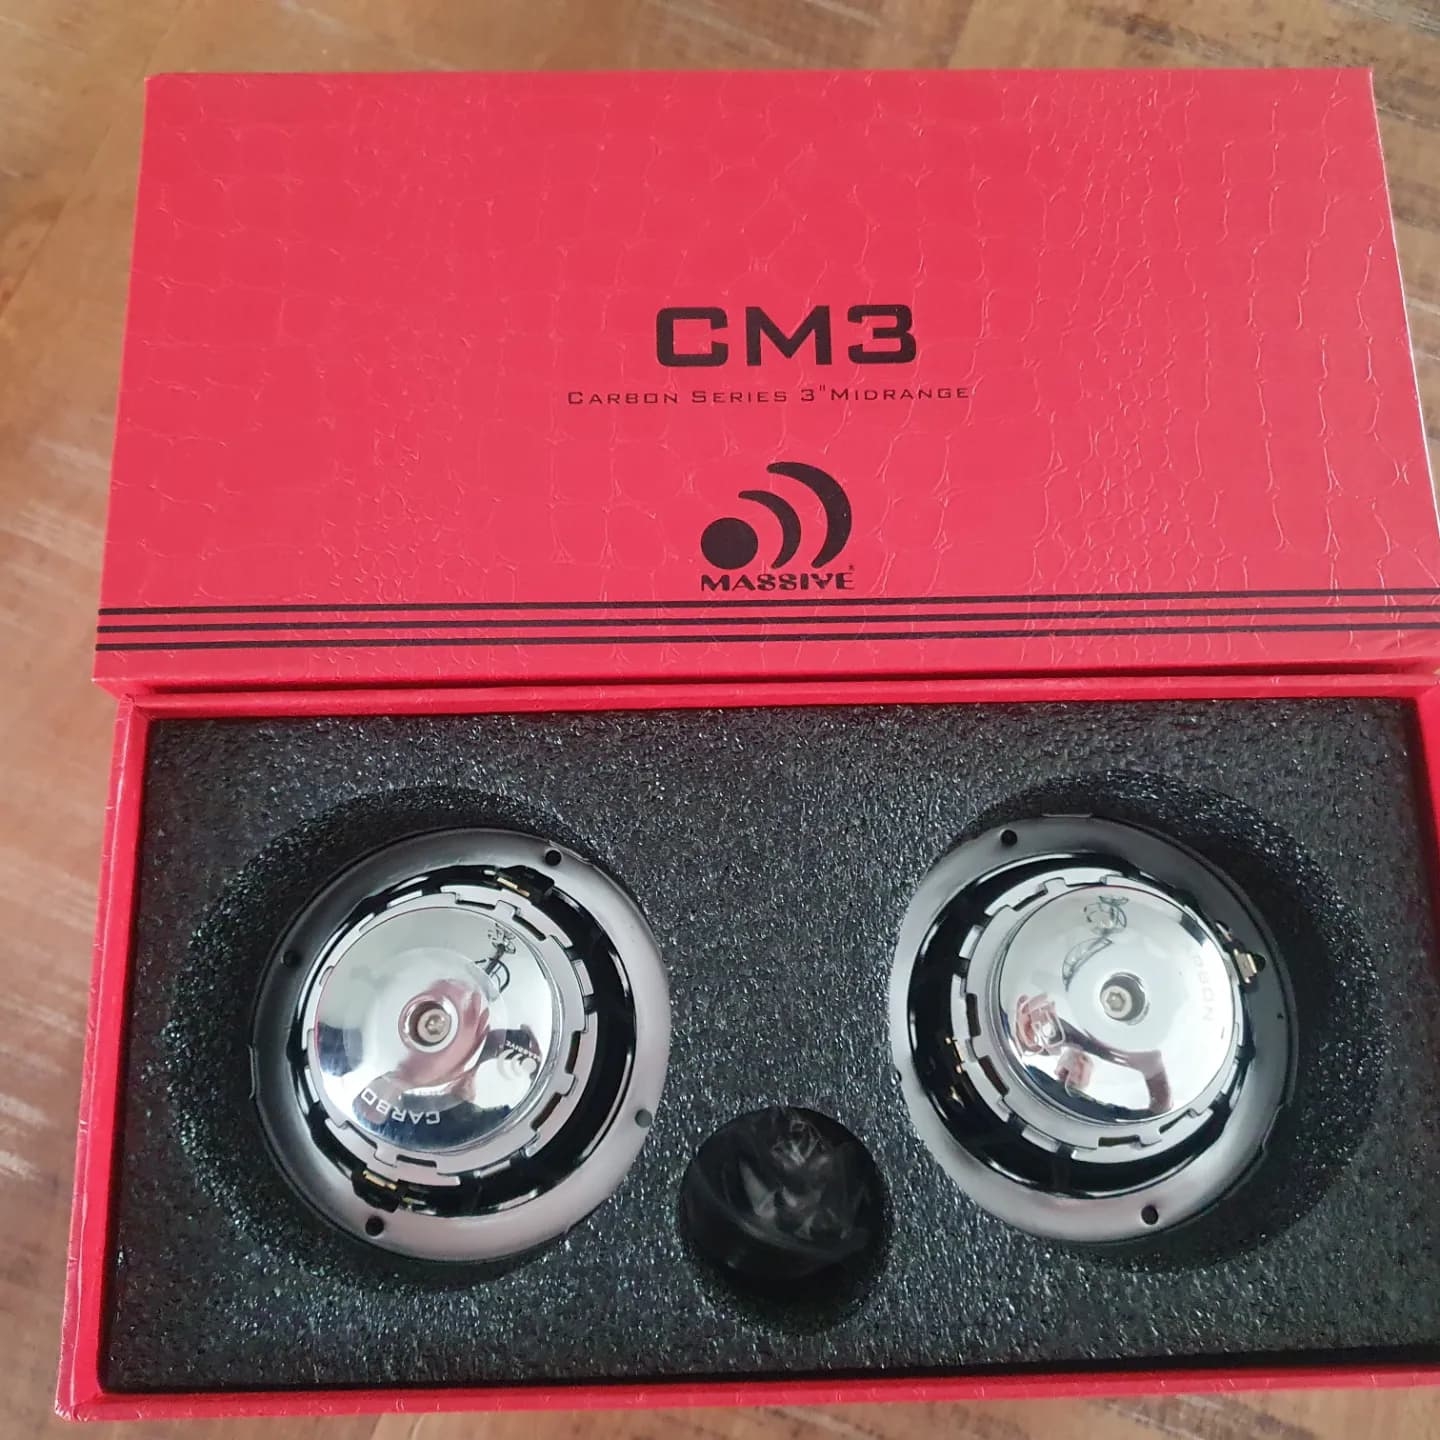 CM 3 high quality mid range